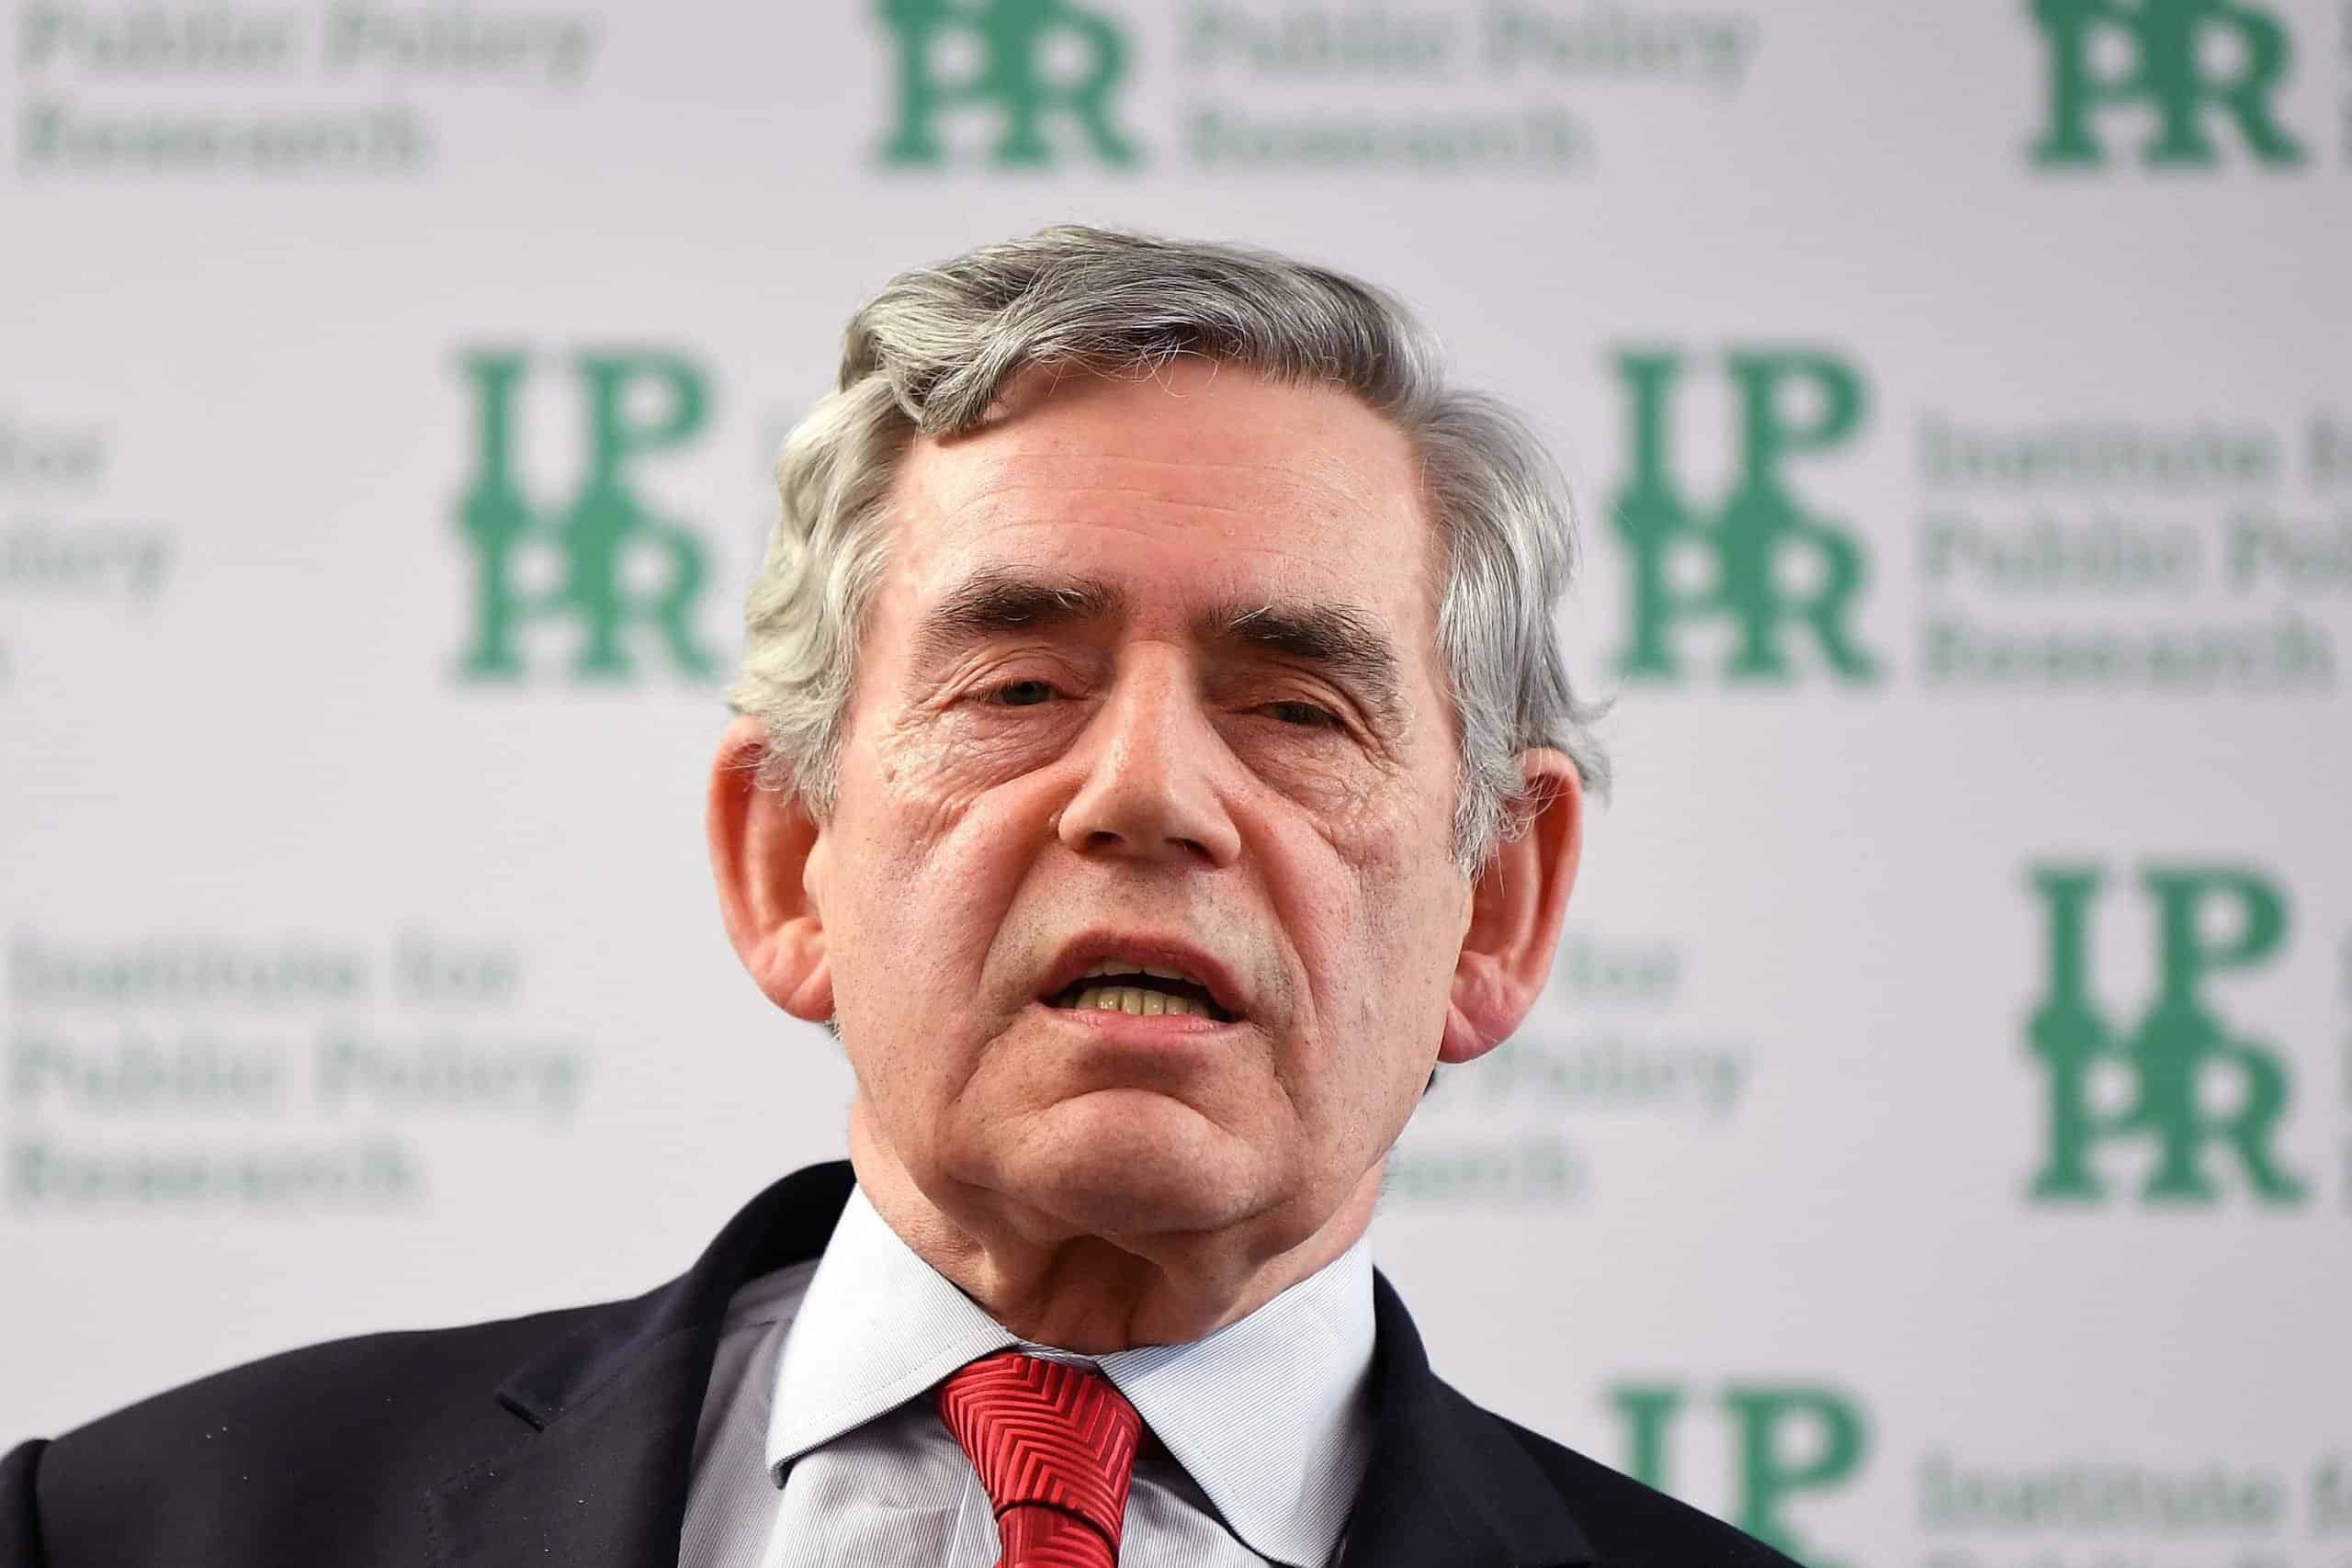 Demand referendum on better NHS pay, Gordon Brown tells nurses